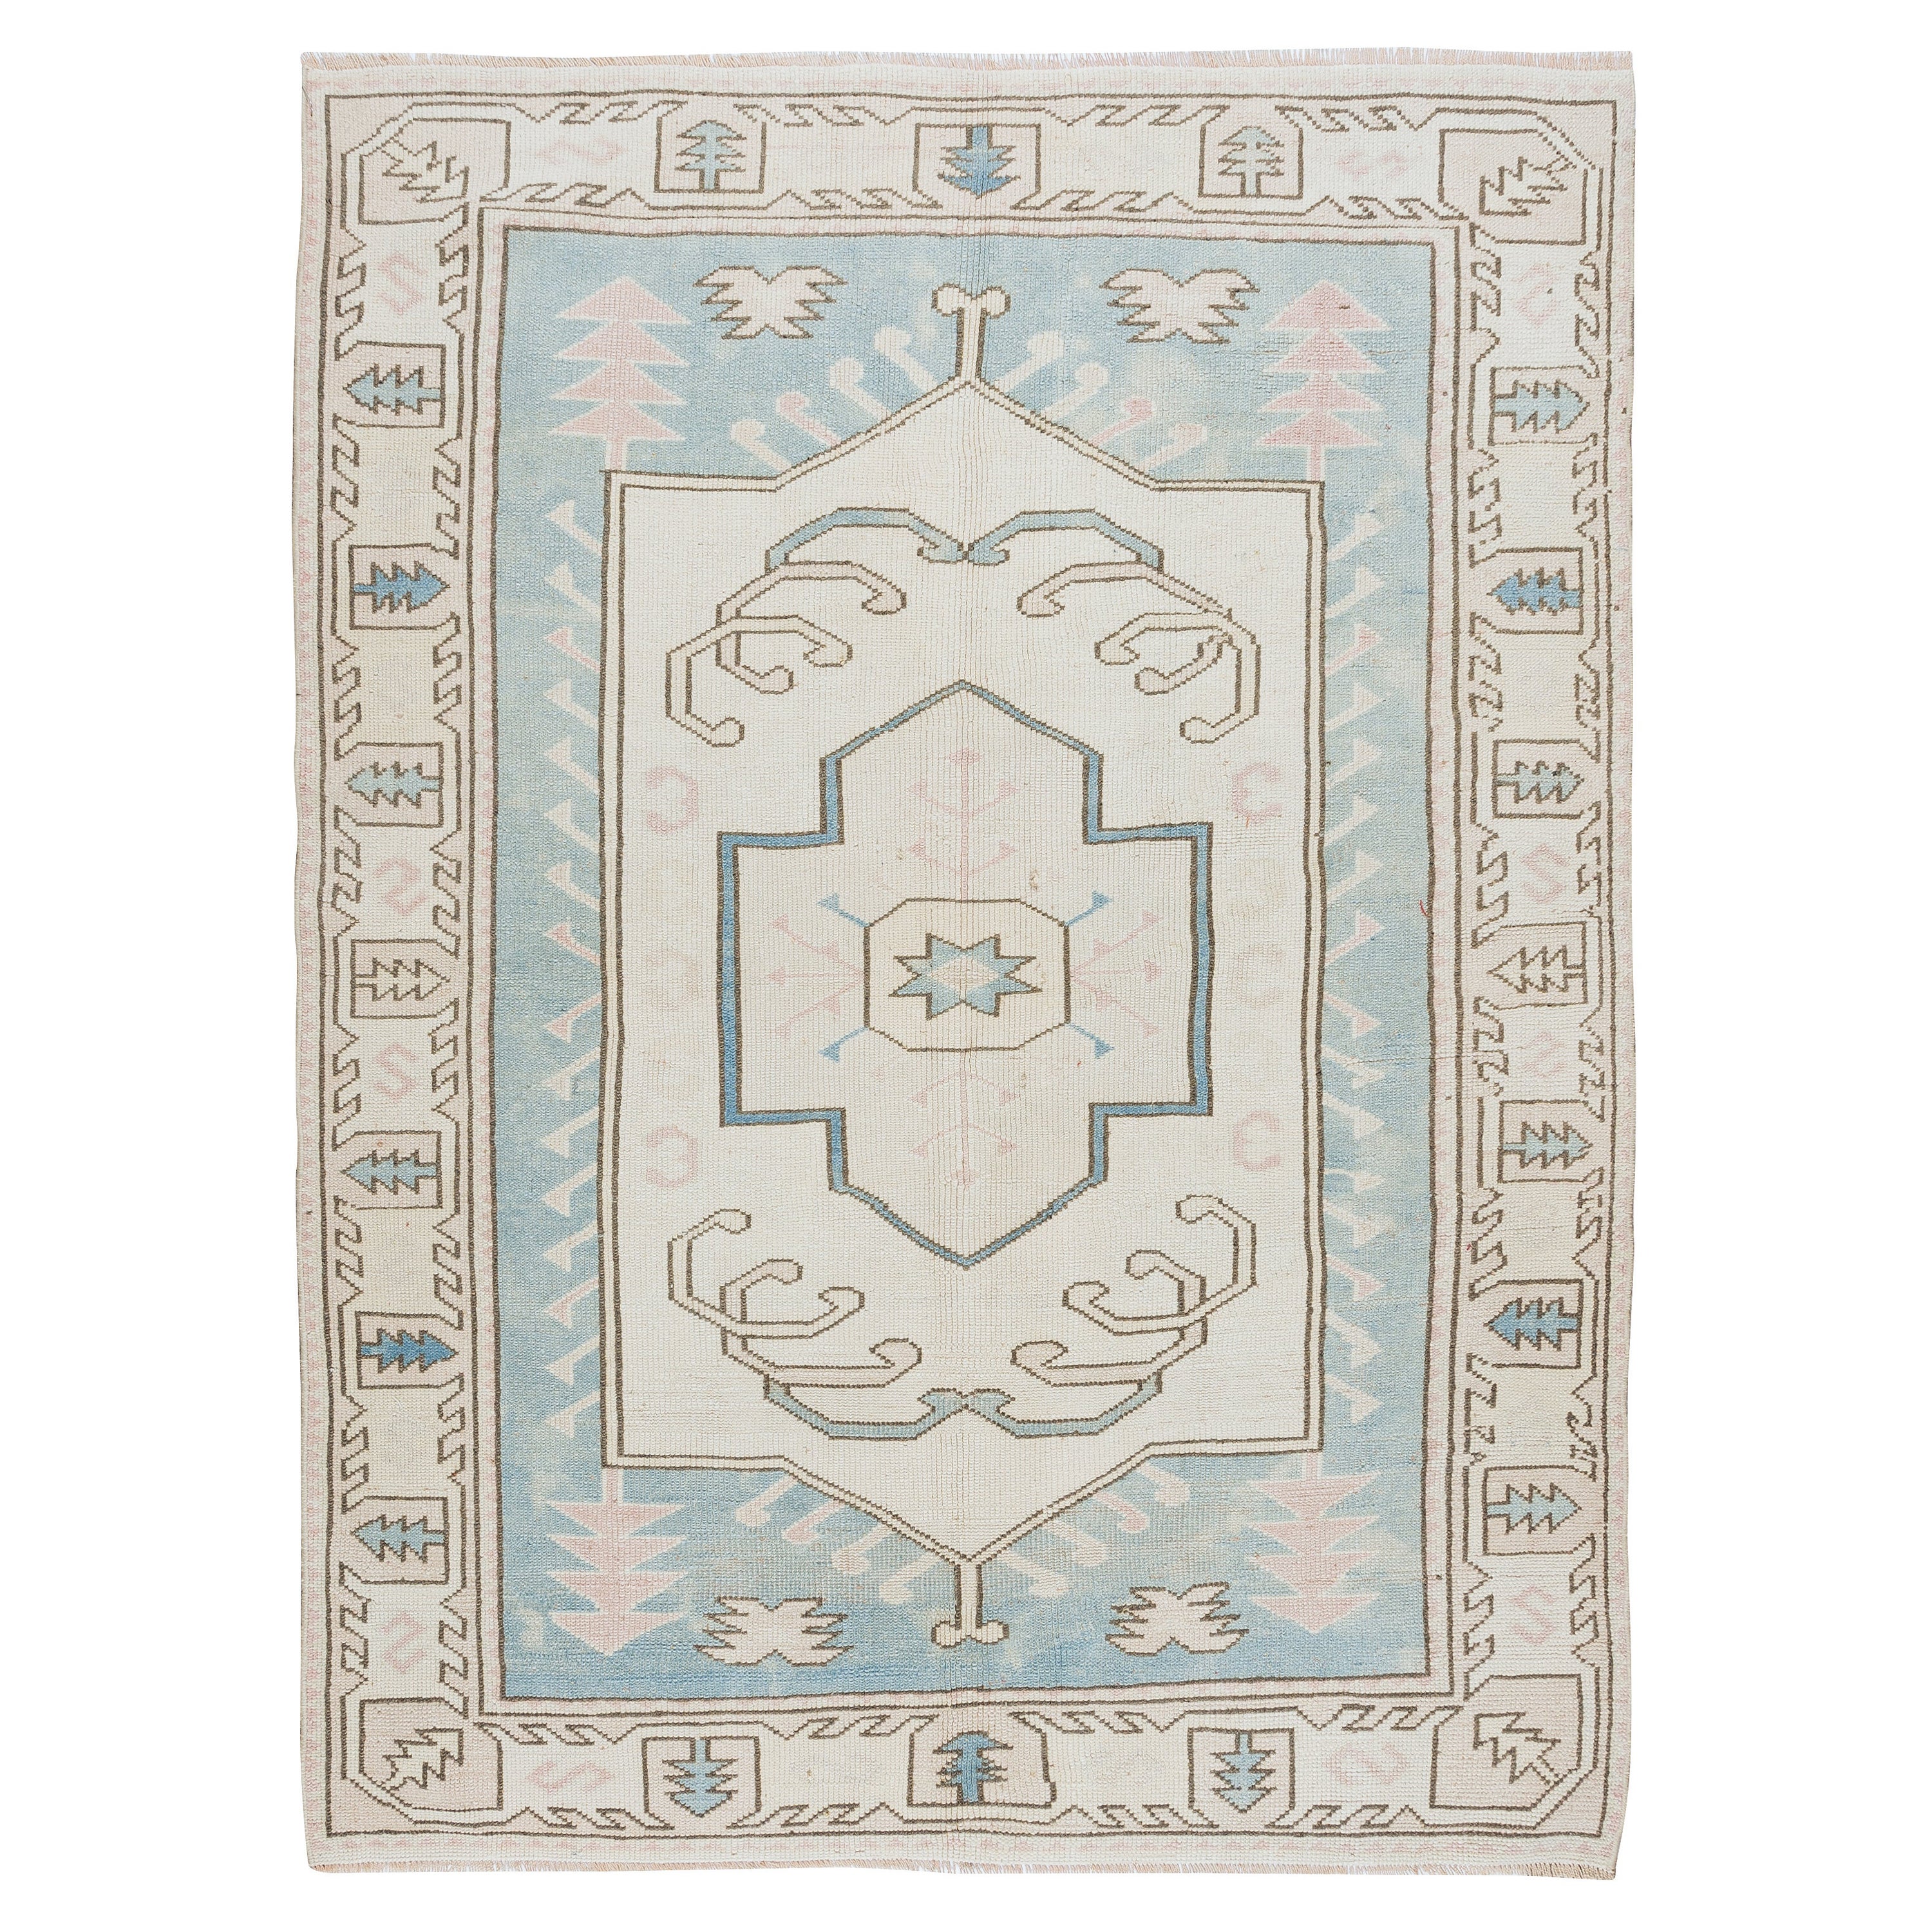 5x6.6 Ft Modern Handmade Turkish Geometric Wool Area Rug in Light Blue & Cream For Sale